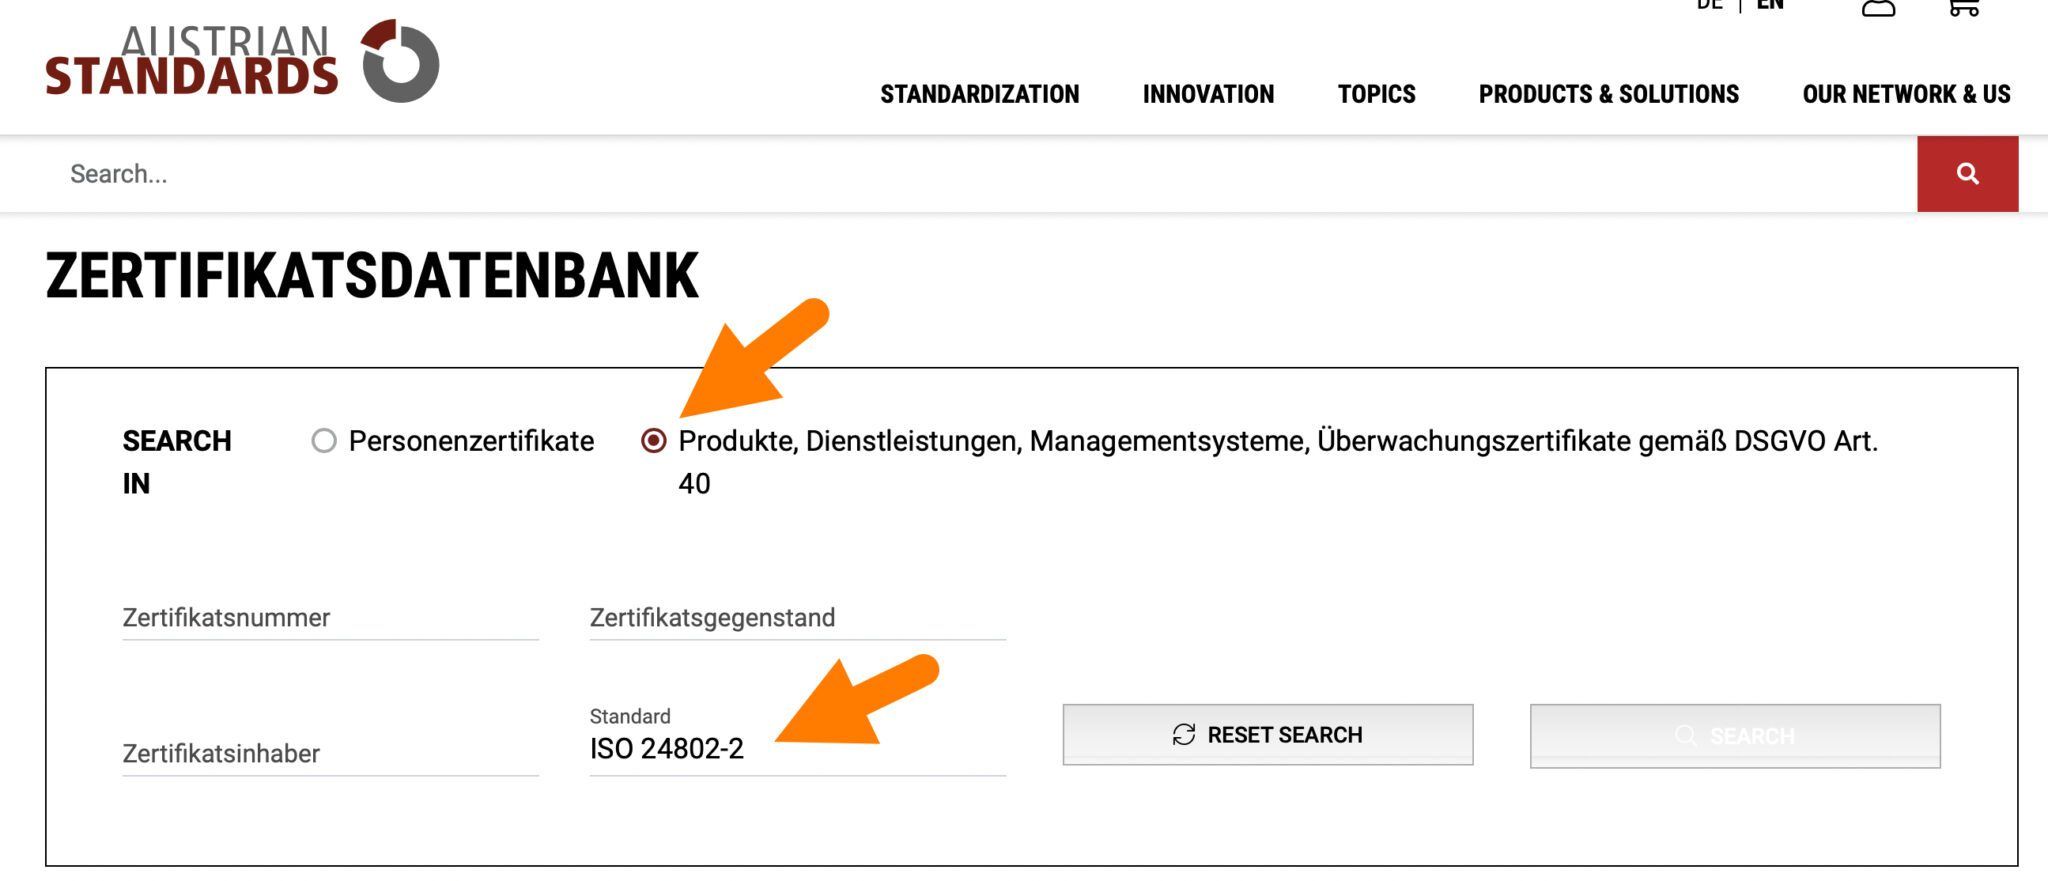 Austrian Standards Certification Database